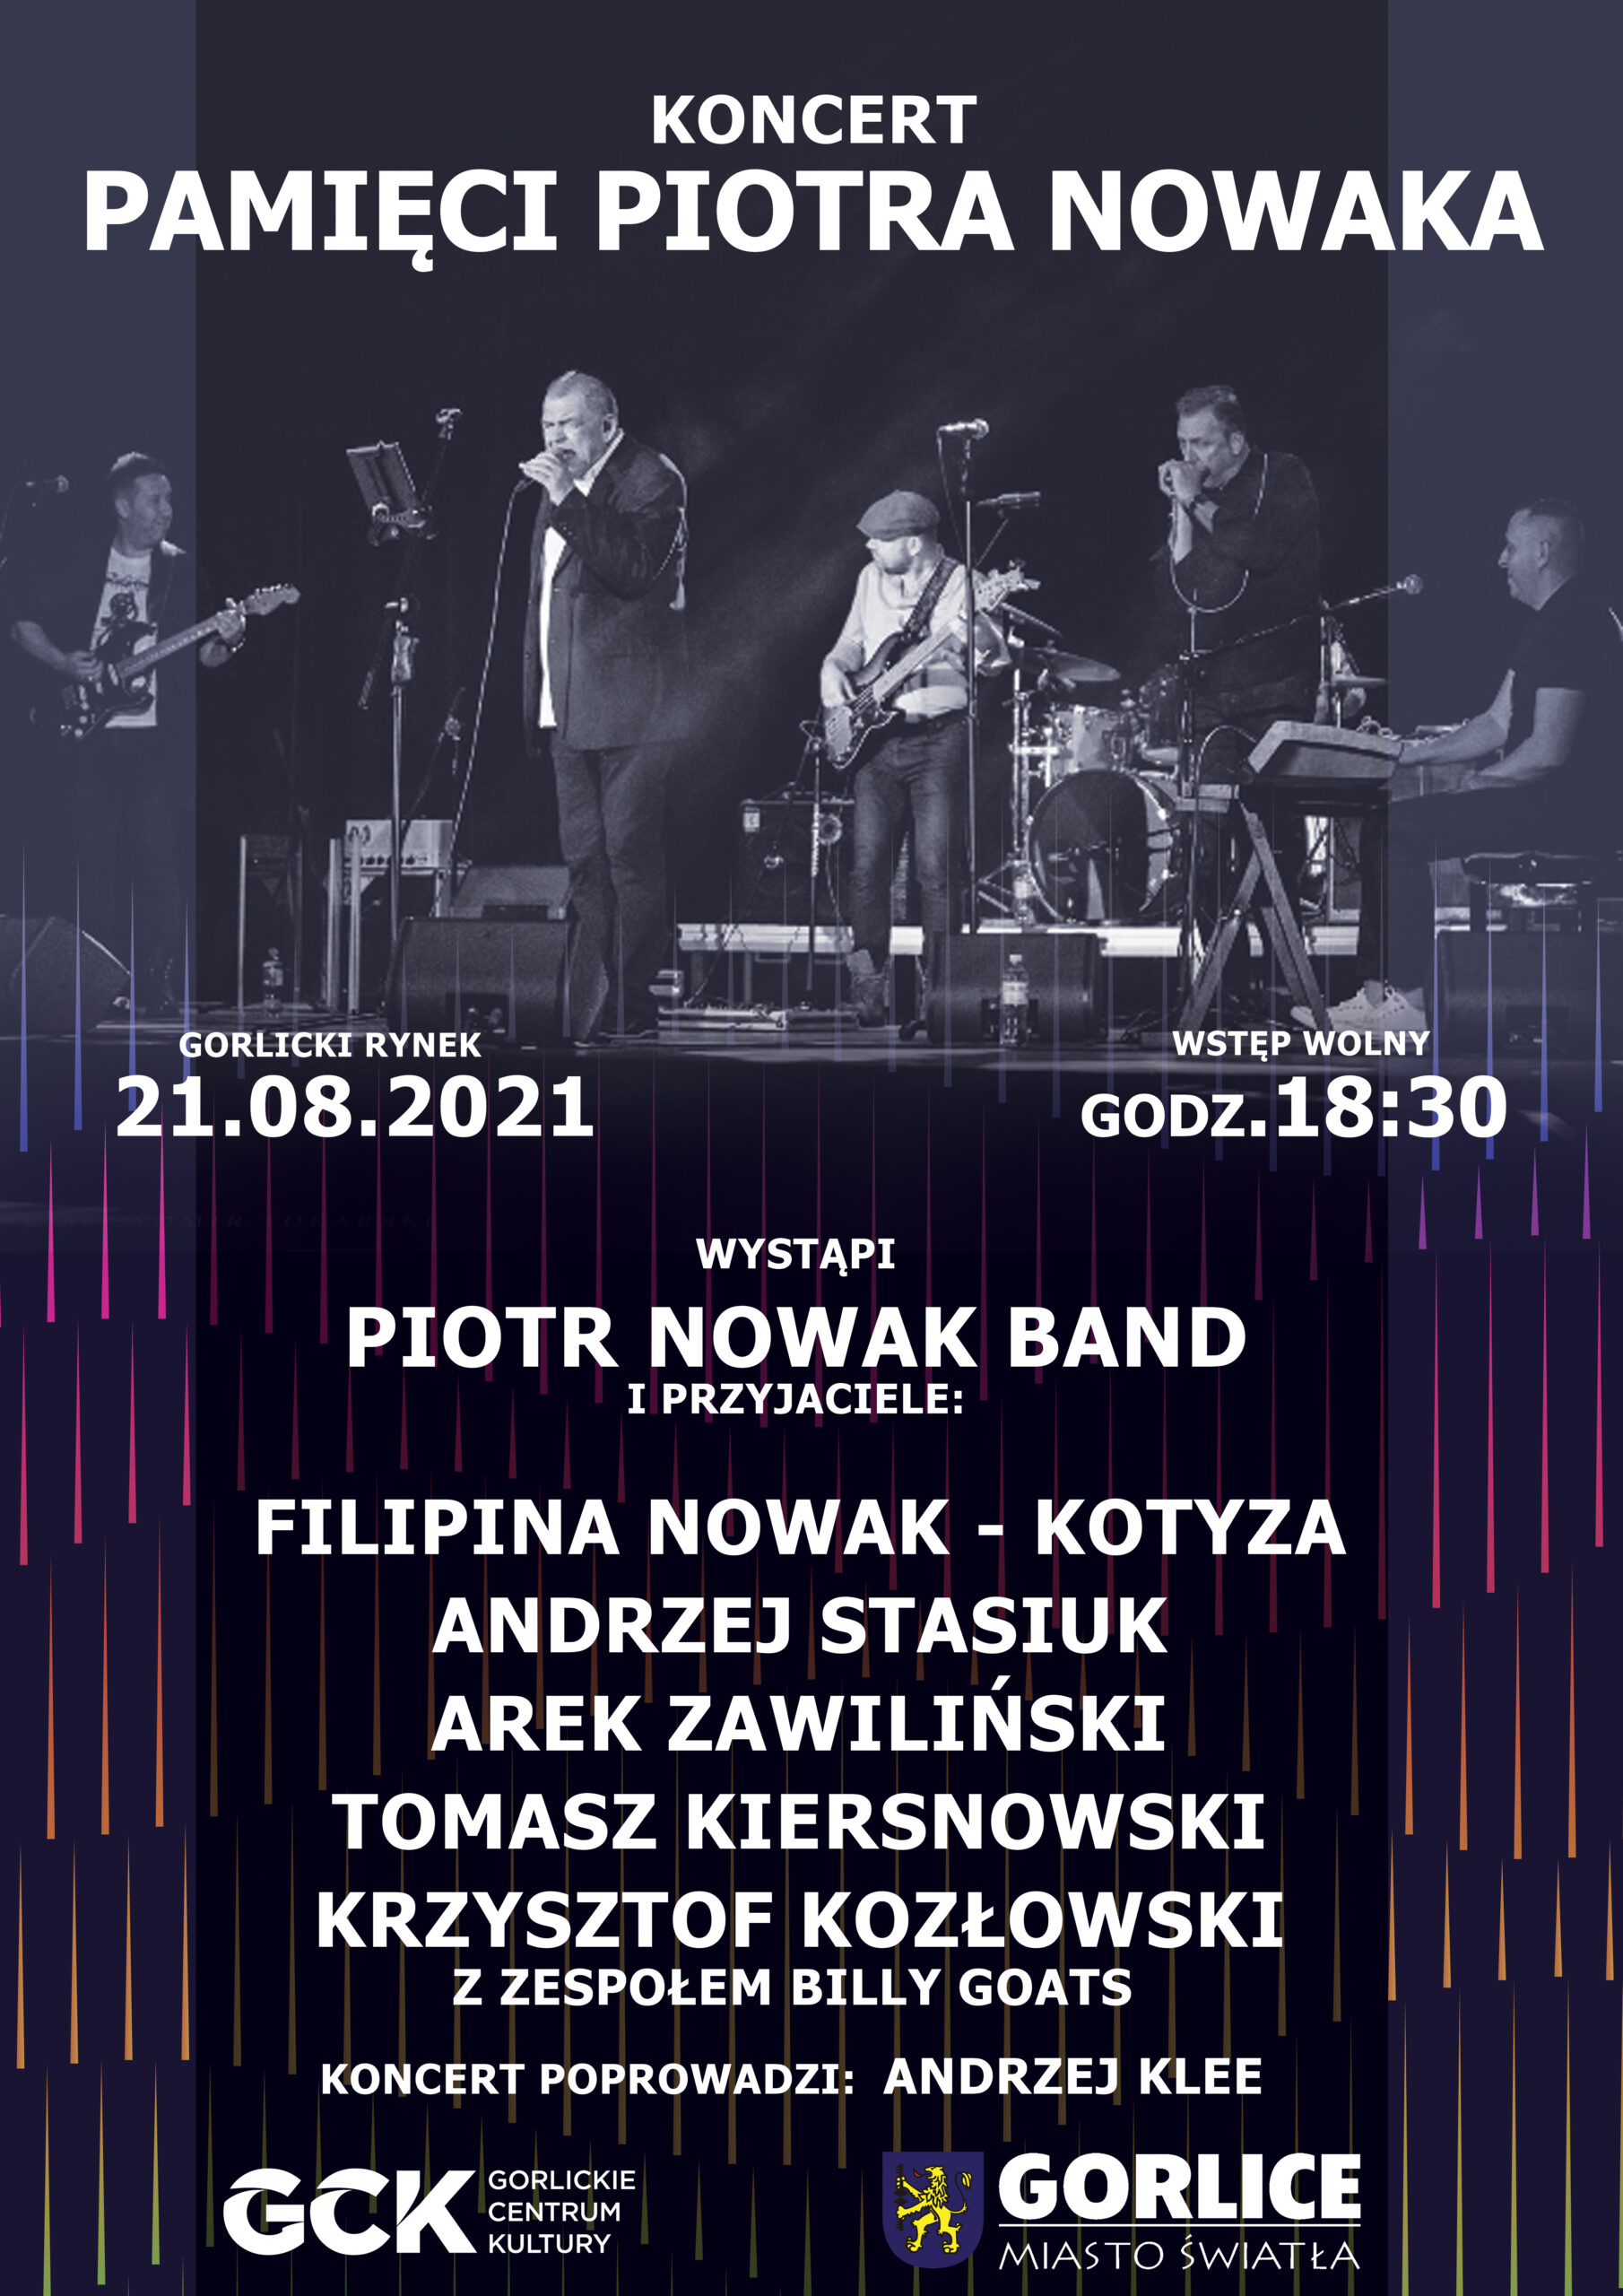 Koncert pamięci Piotra Nowaka